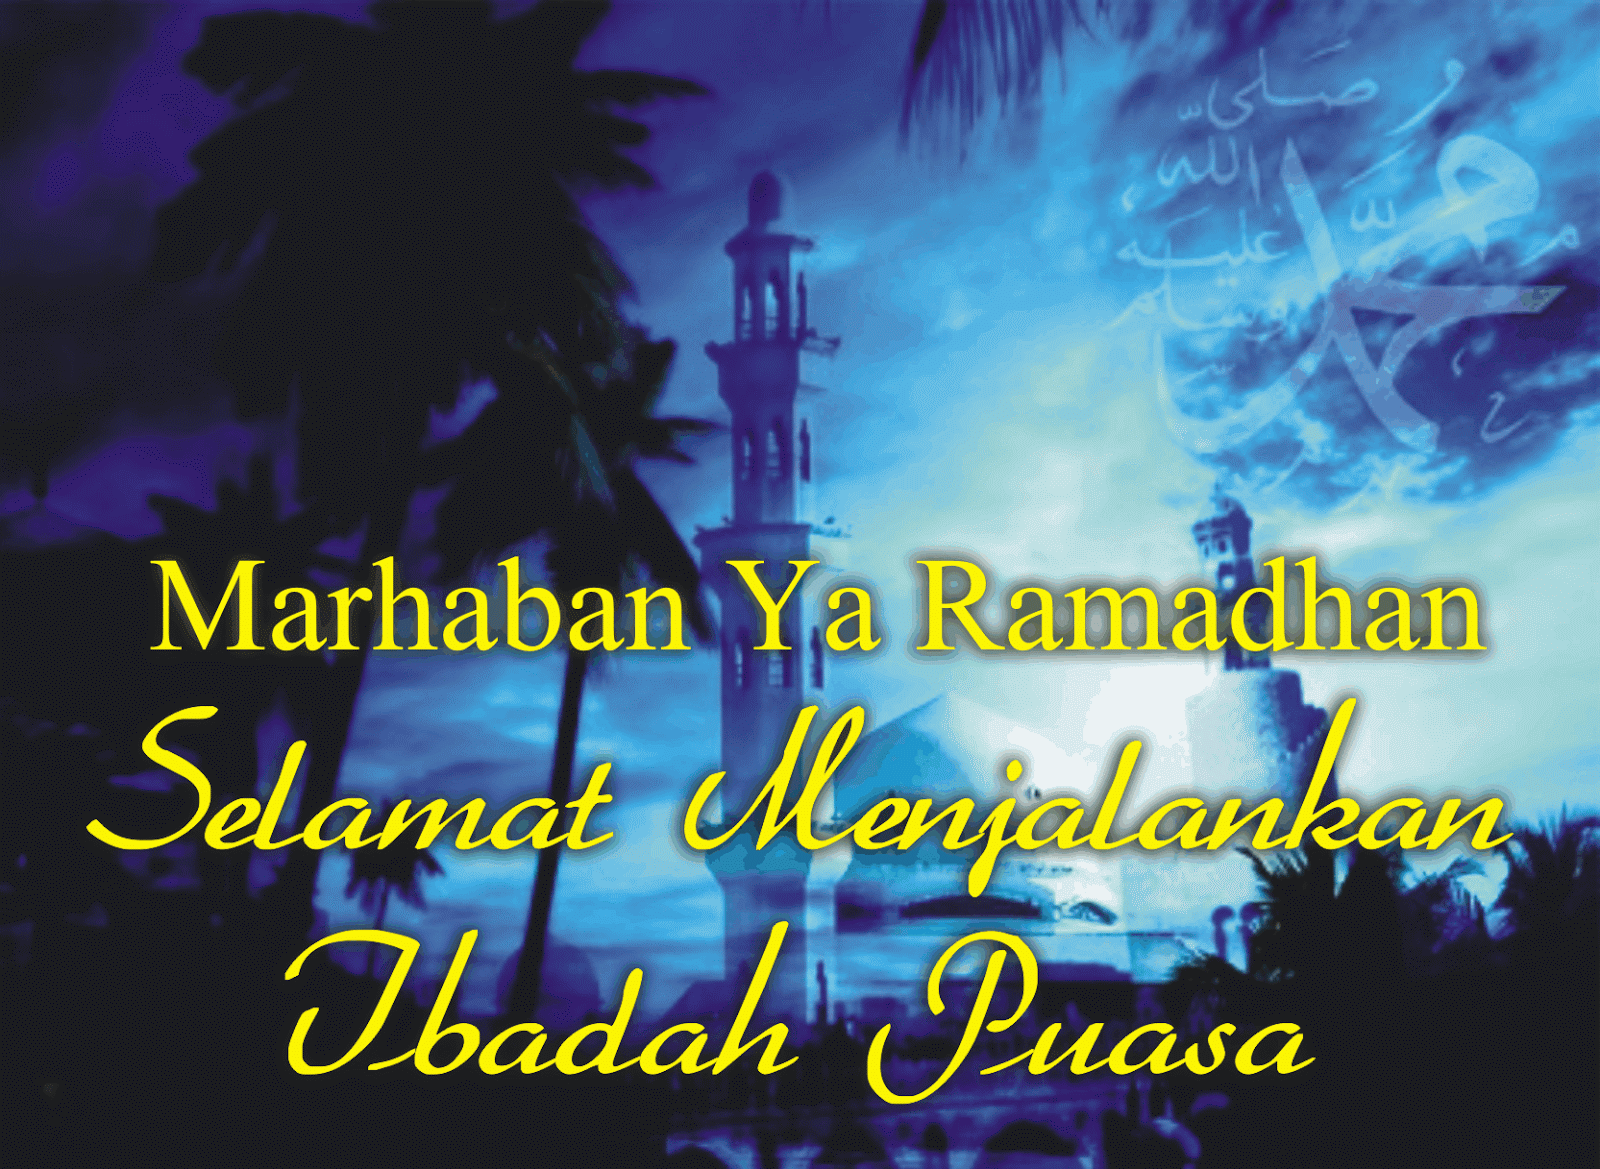 poetradjavablogspot: Ucapan Ramadhan dan Idhul Fitri tahun 2013 / 1434 H.